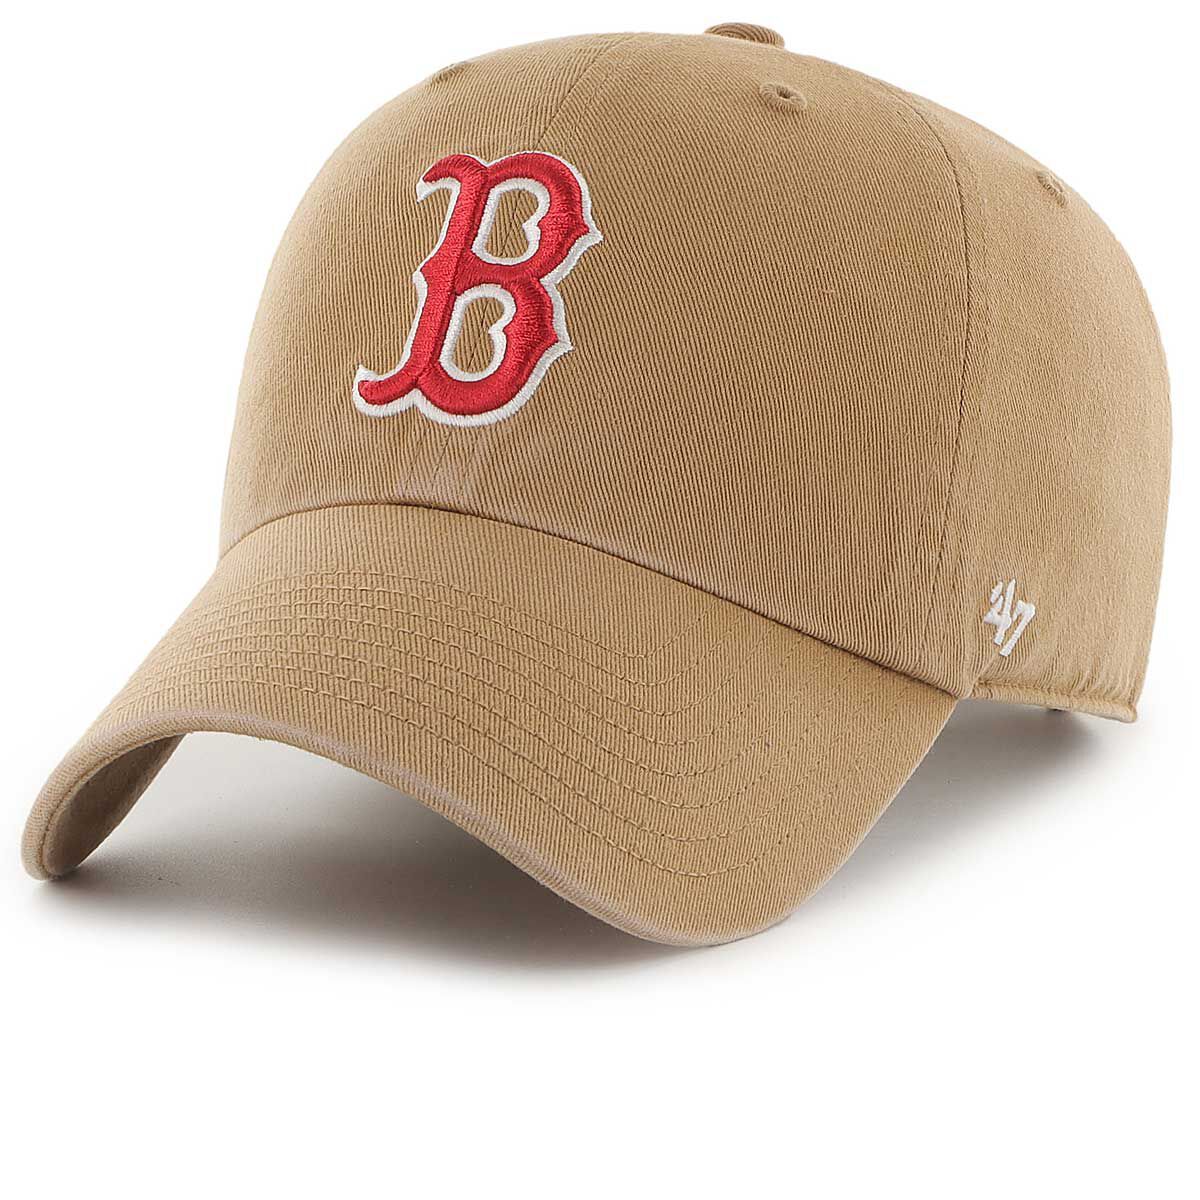 '47 Boston Red Sox Men's Clean Up Cap